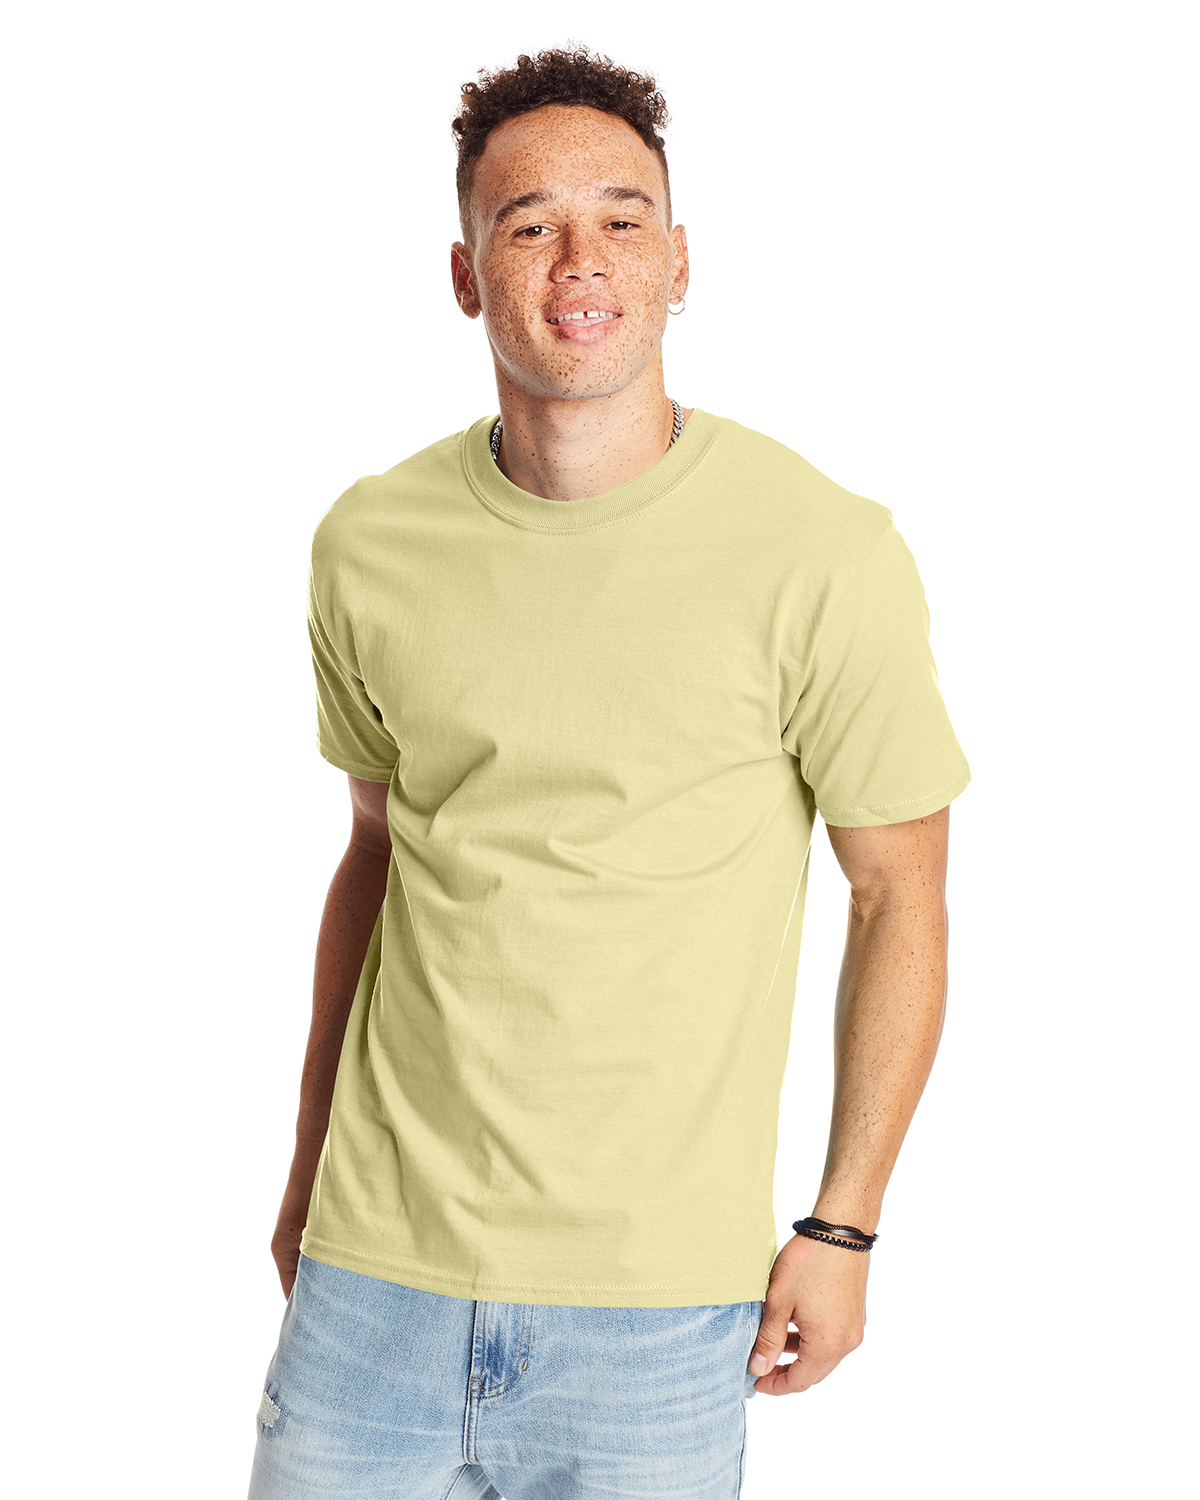 Cotton T-Shirt 5180 2XL 3XL 4XL 5XL 6XL 30 colors and more Hanes Beefy-T 6.1 oz